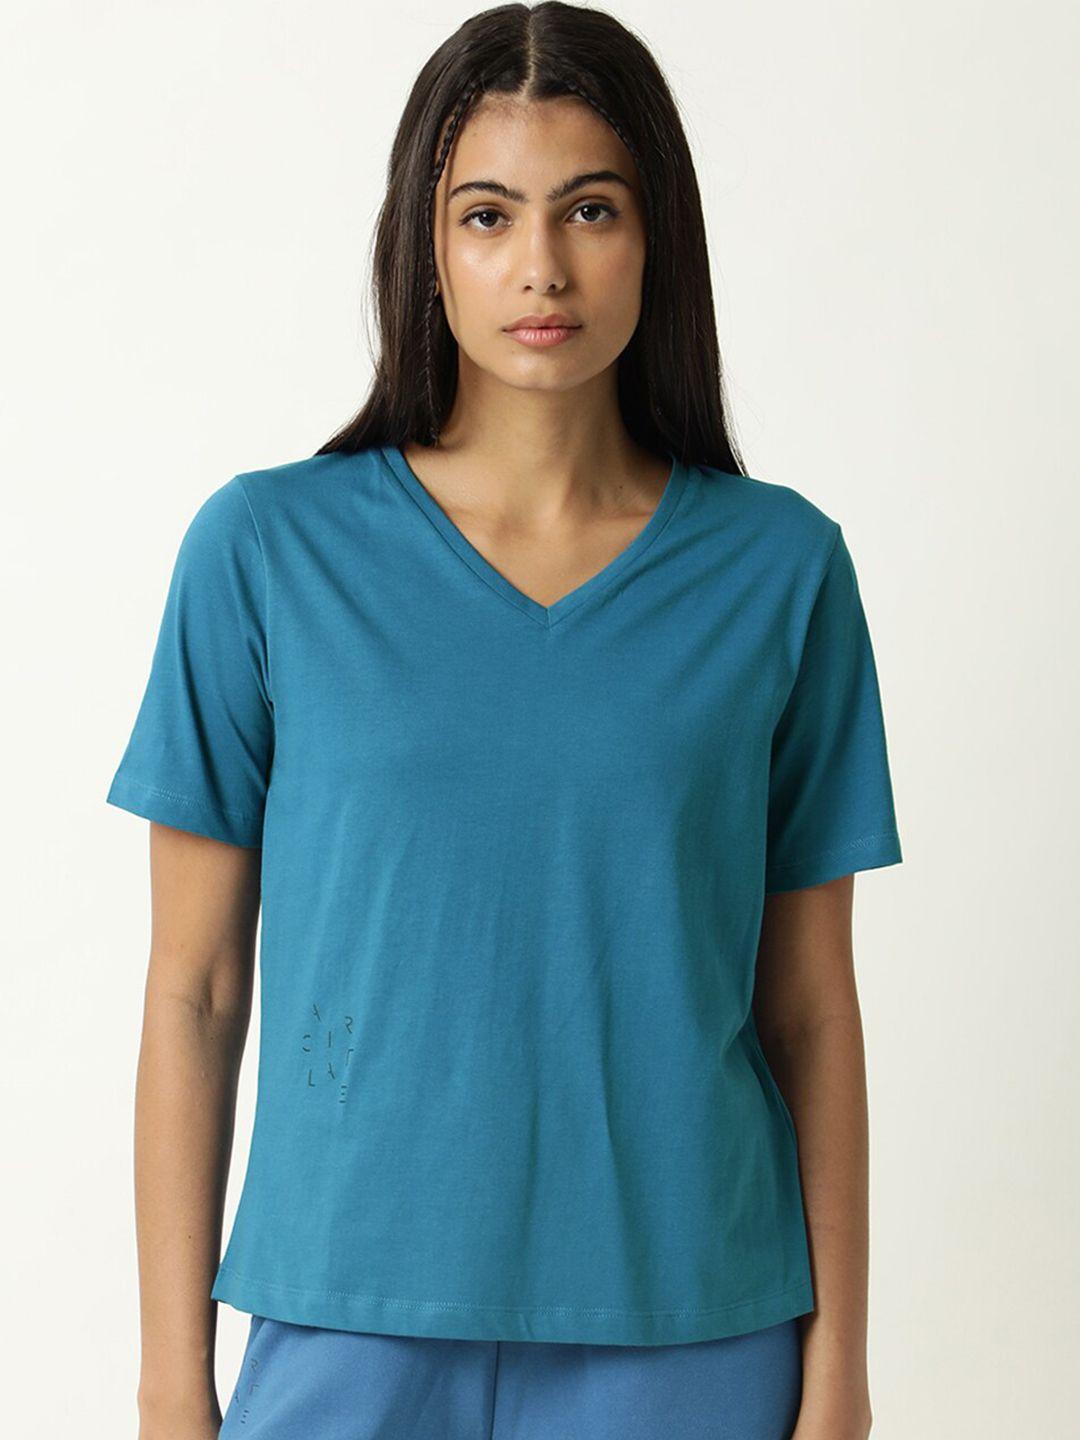 articale-women-teal-solid-v-neck-slim-fit-cotton-t-shirt